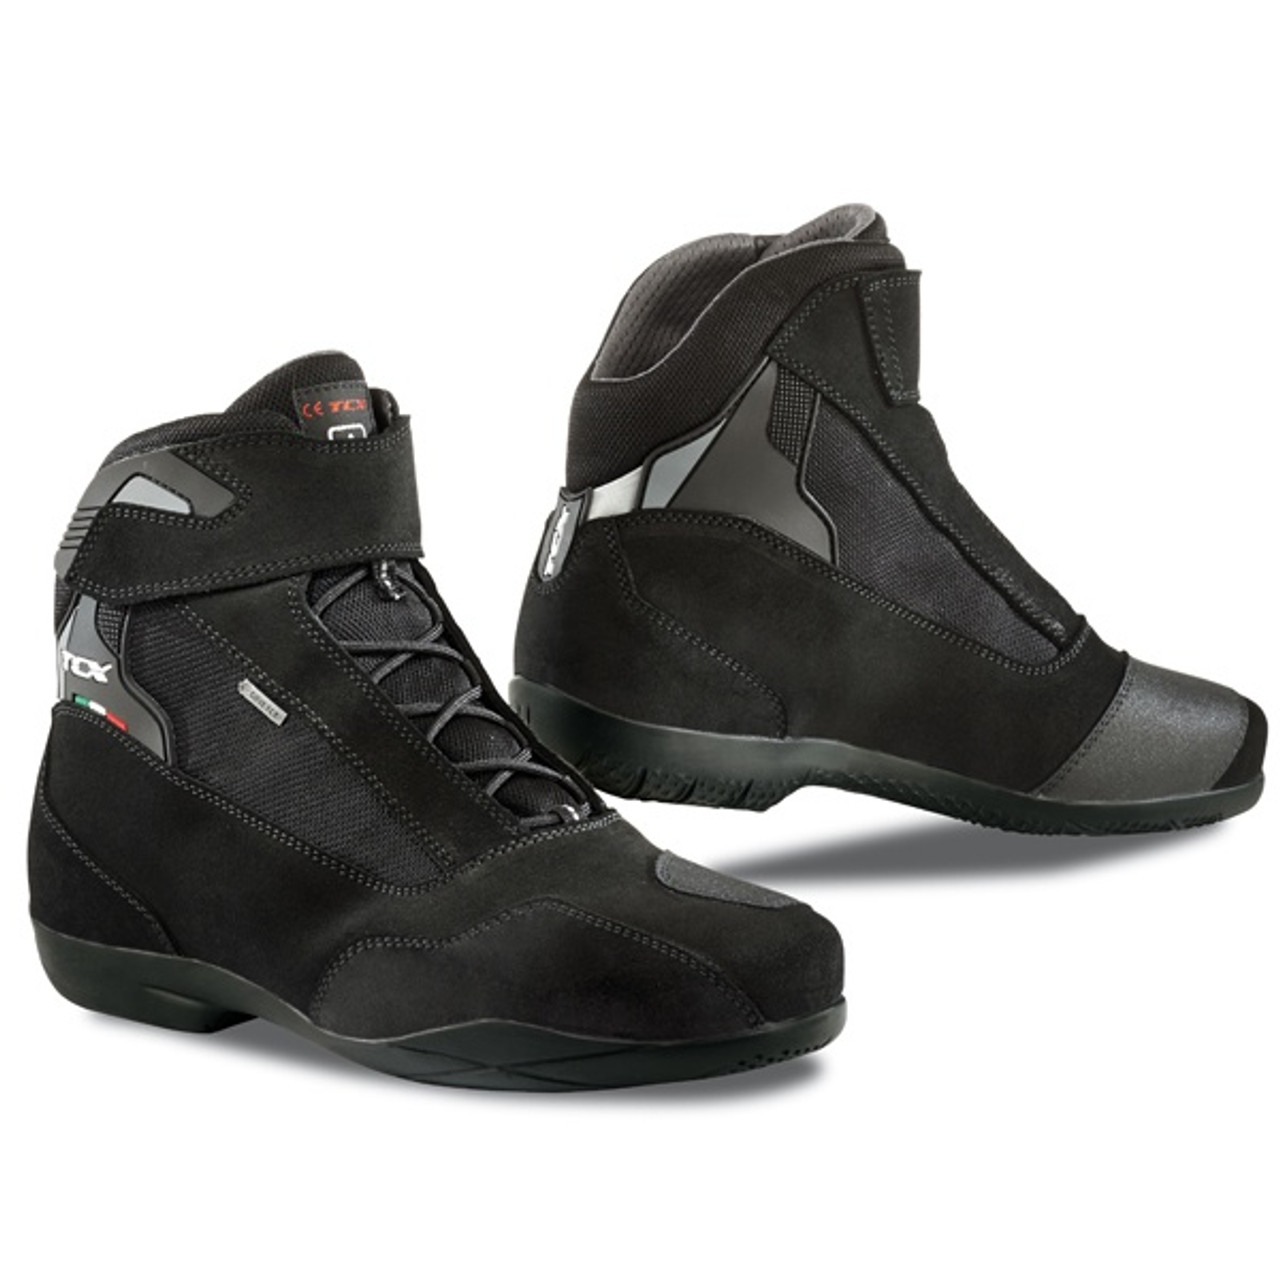 TCX Jupiter 4 GORE-TEX Short Boots - Black